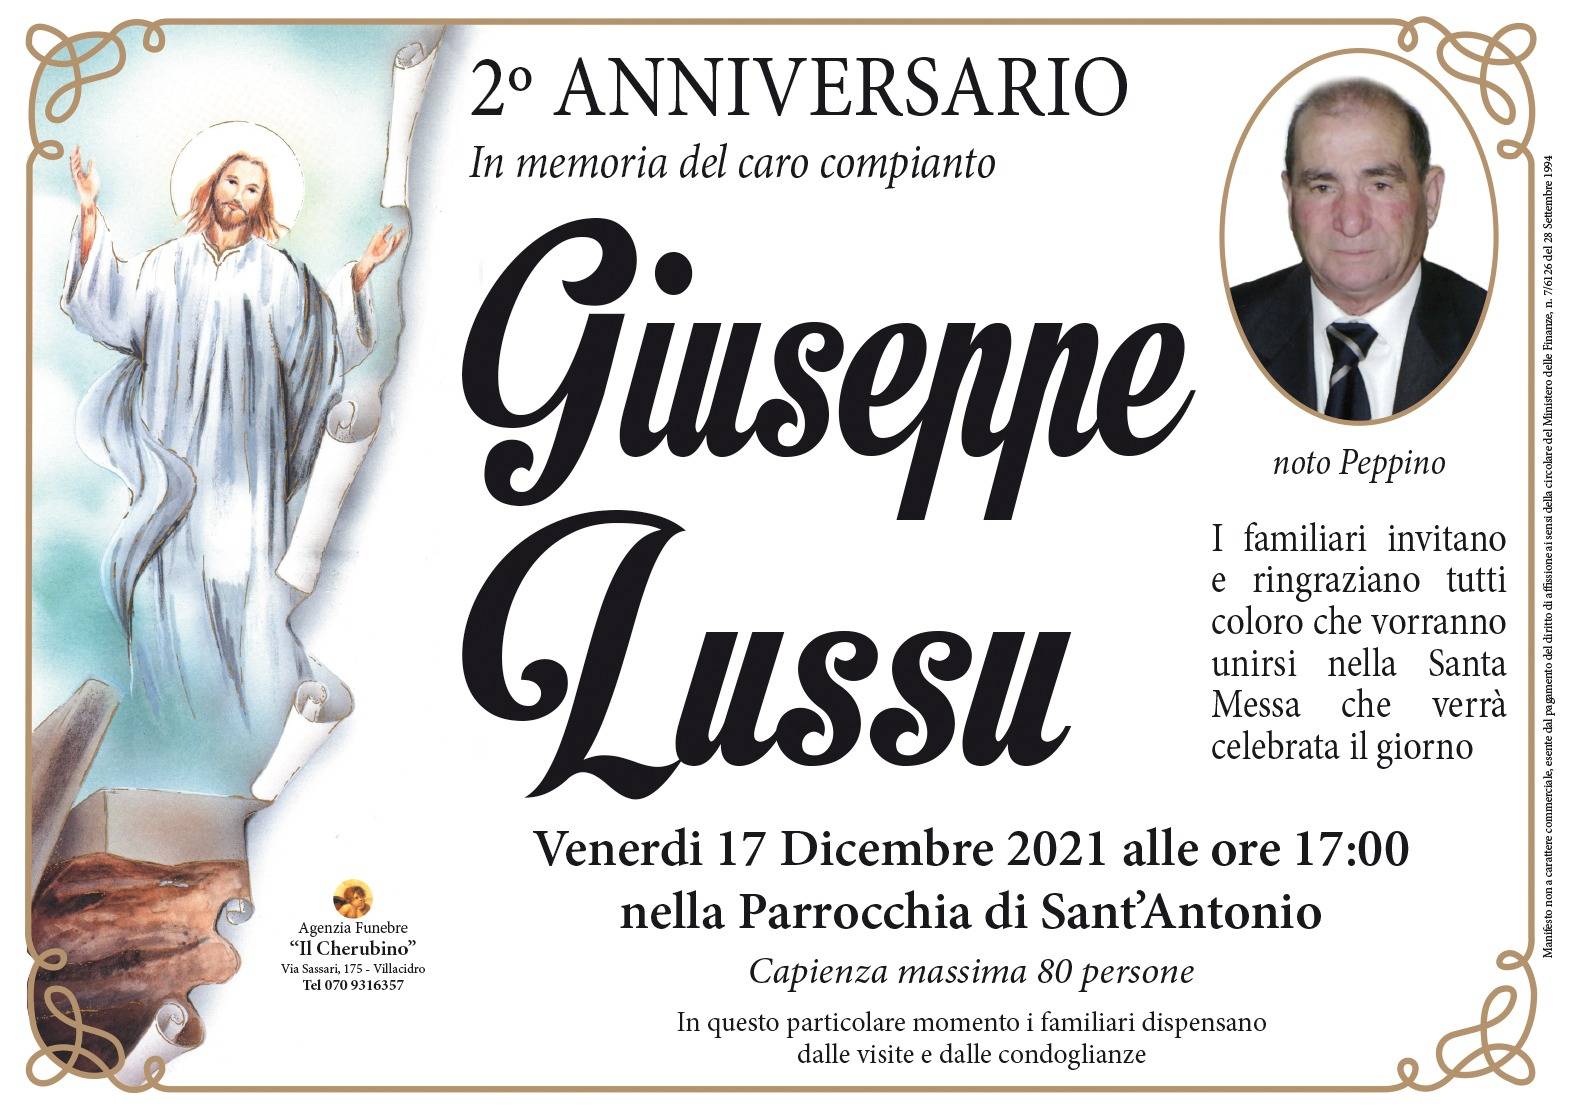 Giuseppe Lussu